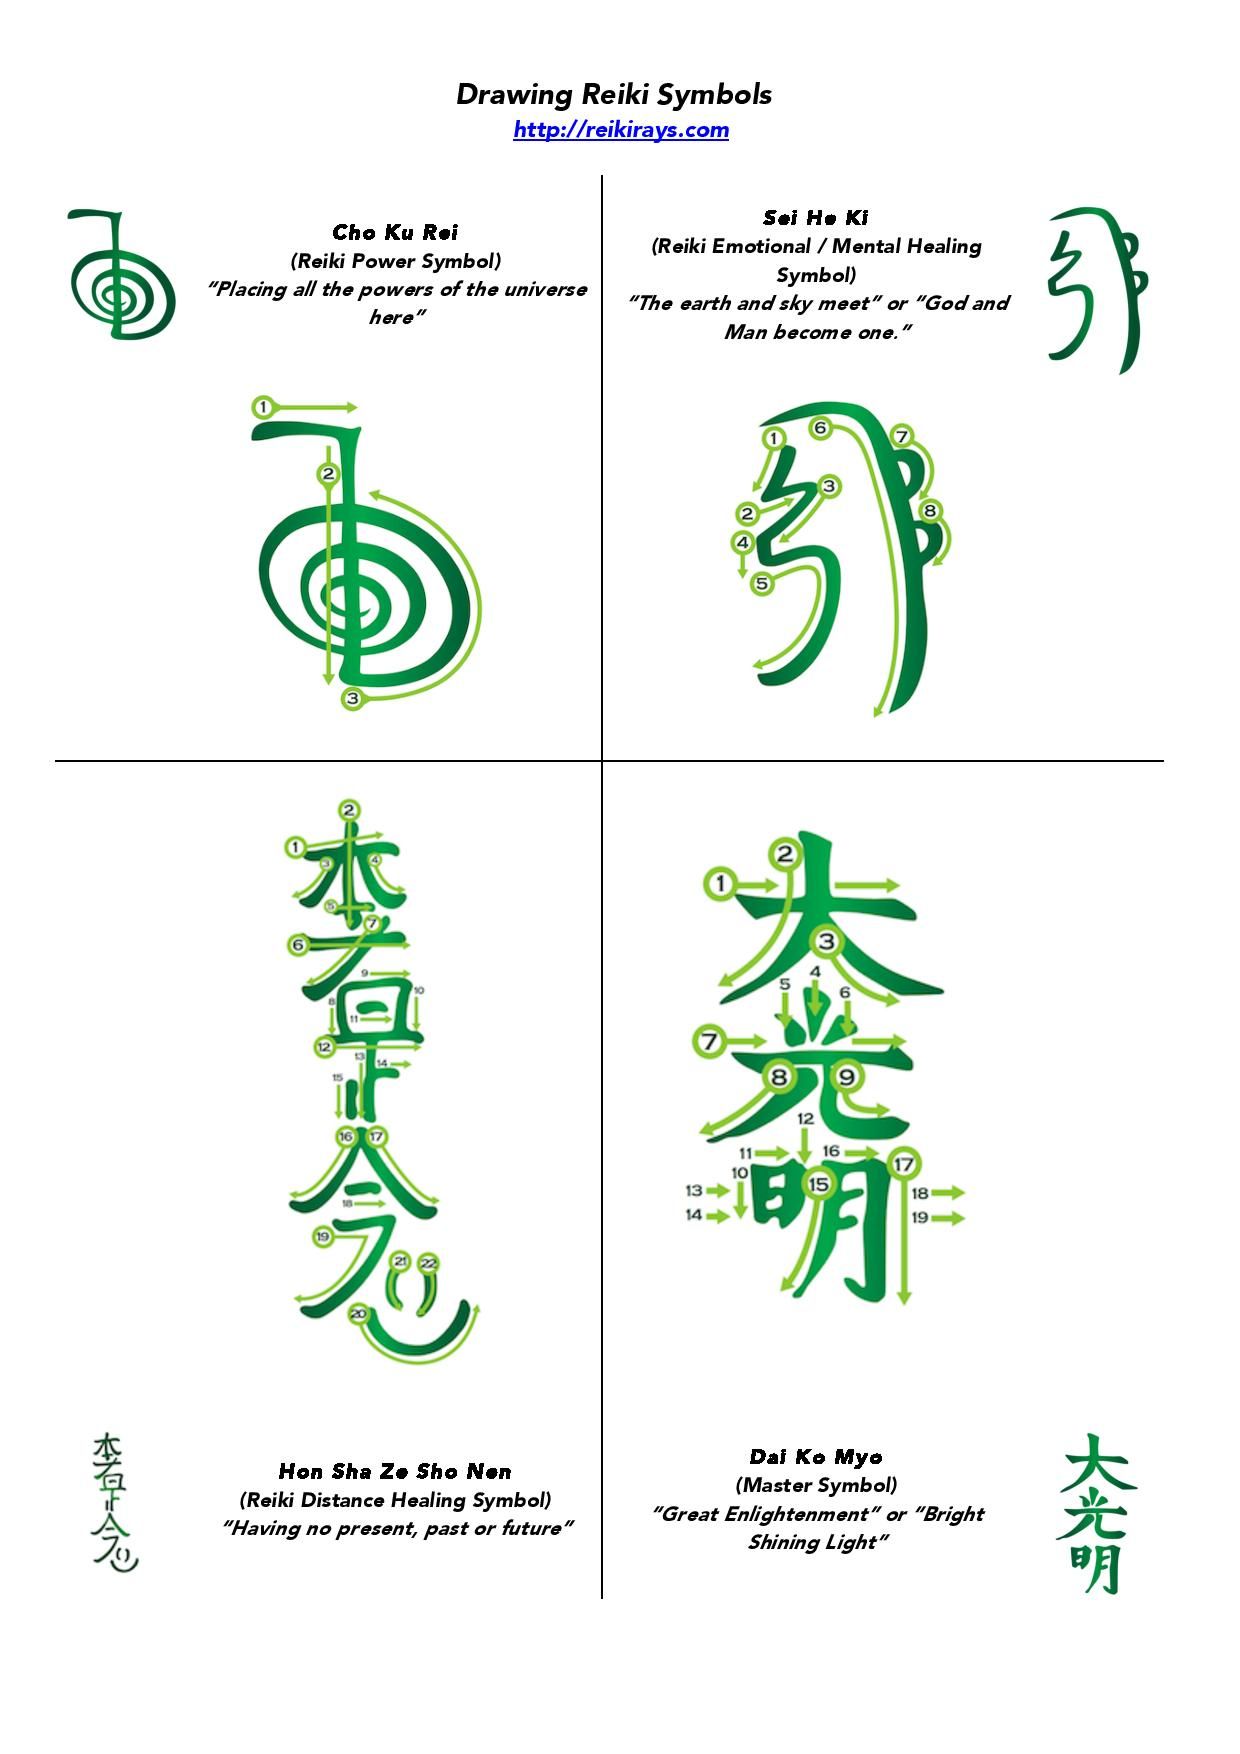 How to Draw the Reiki Symbols - Infographic | Symbols, Reiki symbols ...